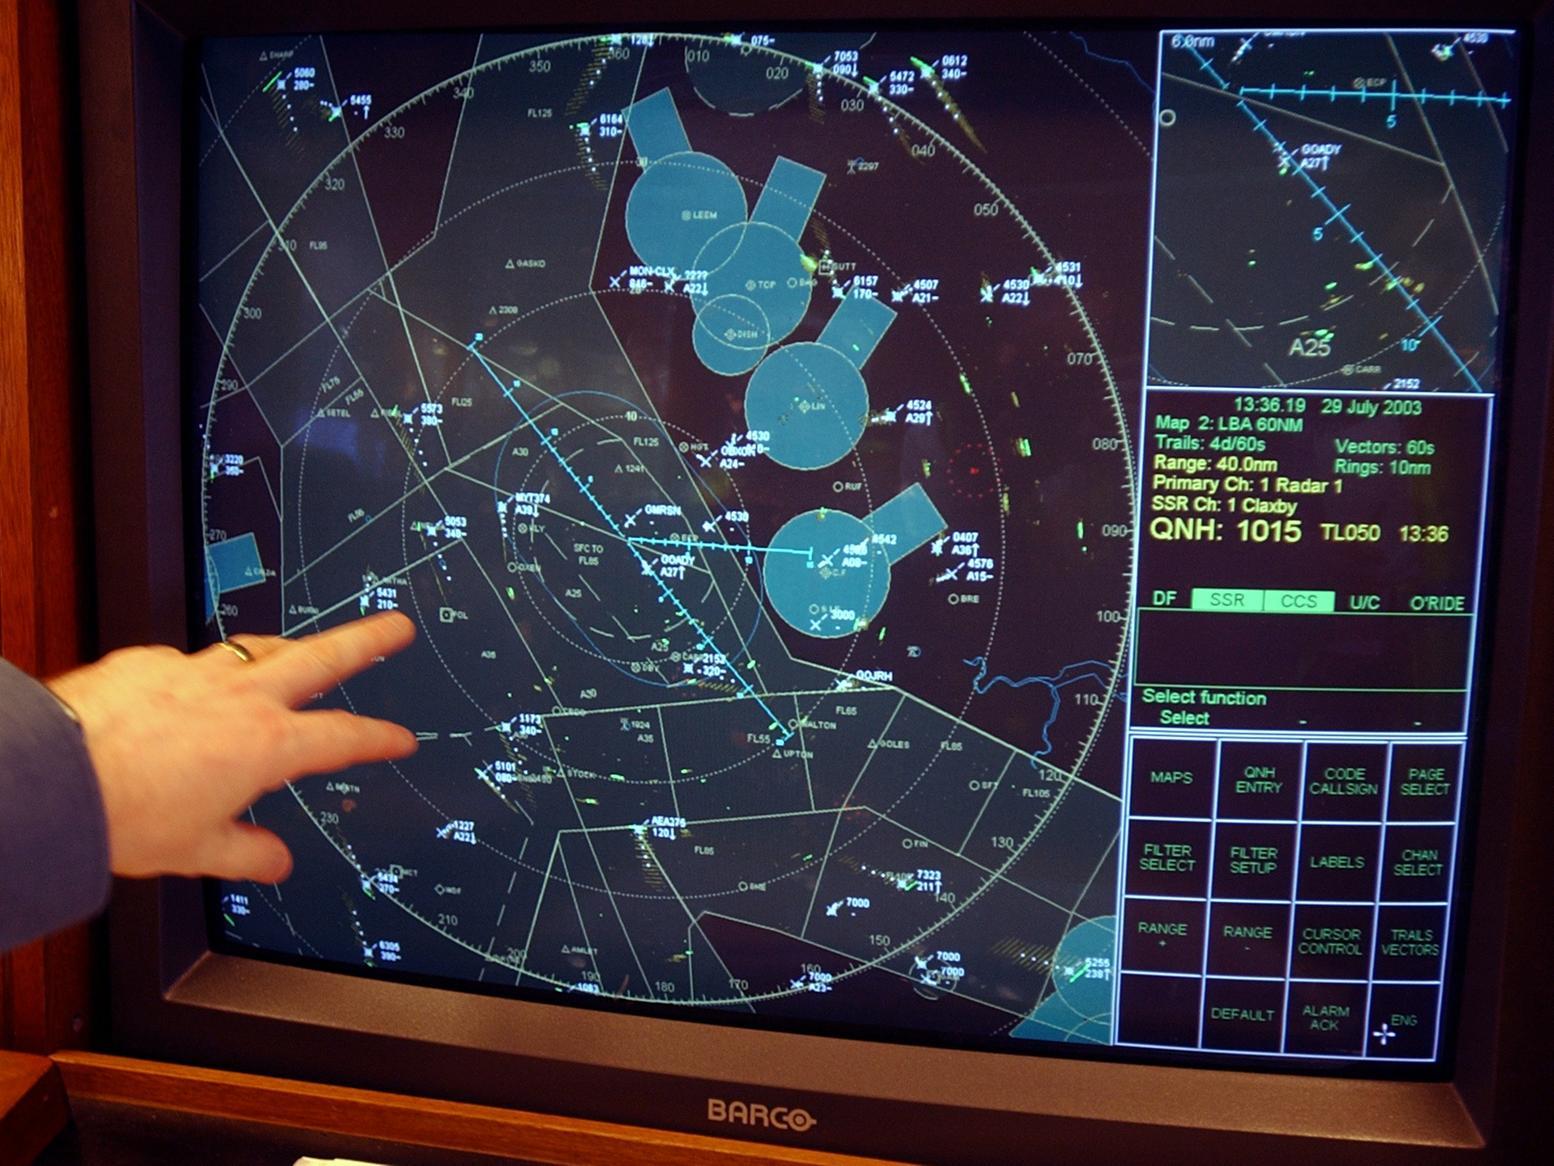 One of the air traffic control radar screens.